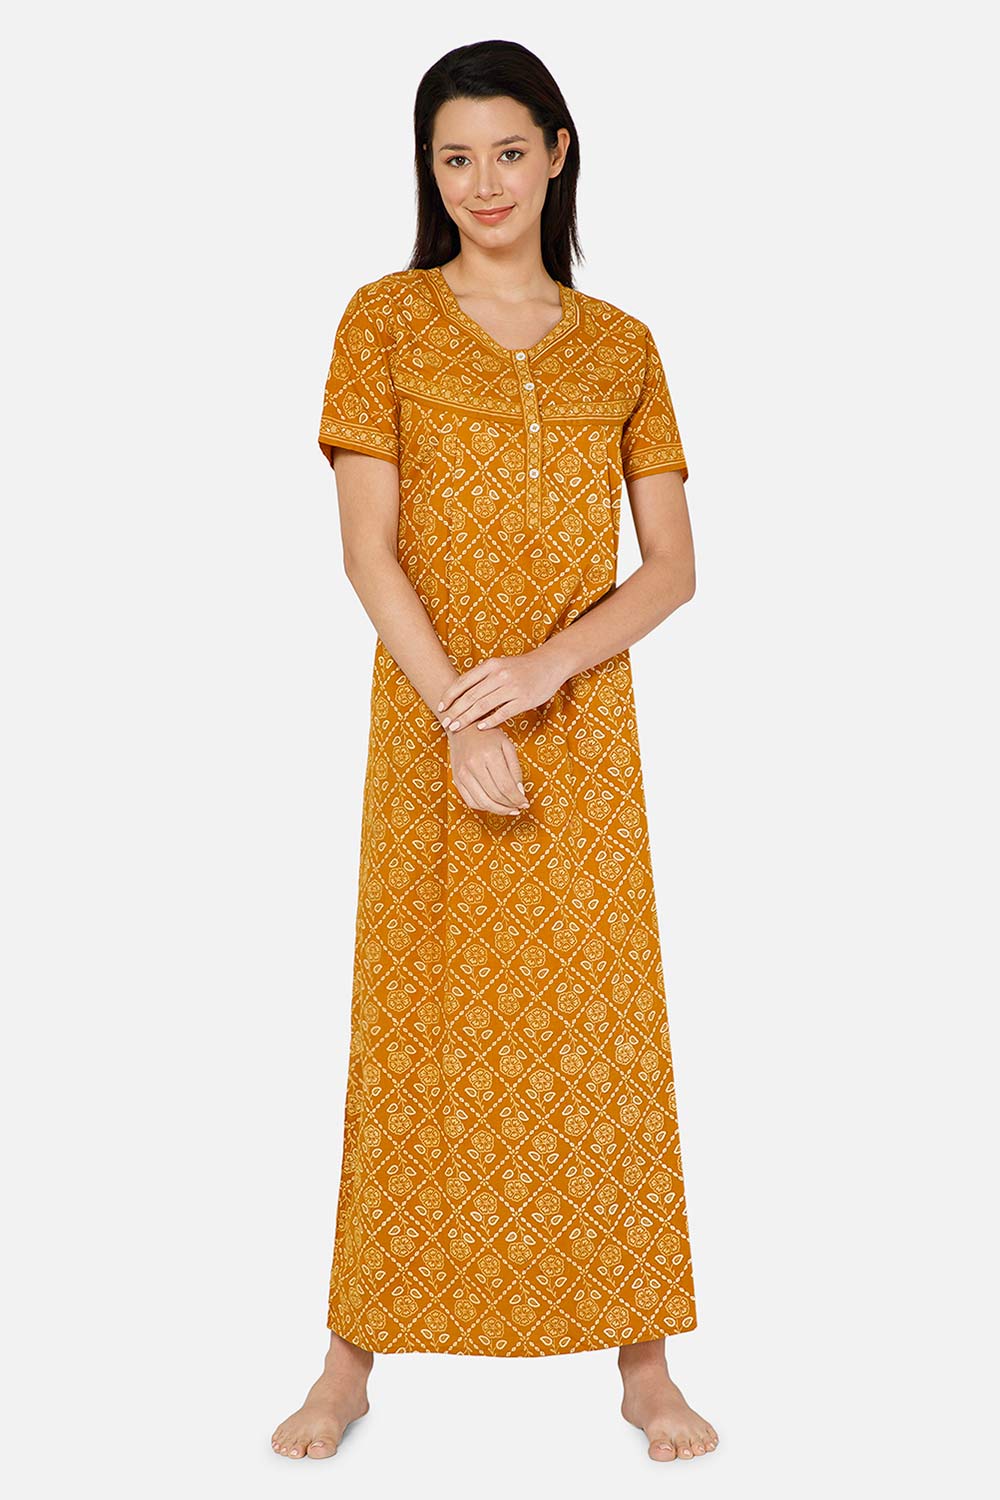 Naidu Hall A-line Front Open Women's Nighty Full Length Half Sleeve  - Yellow - R133